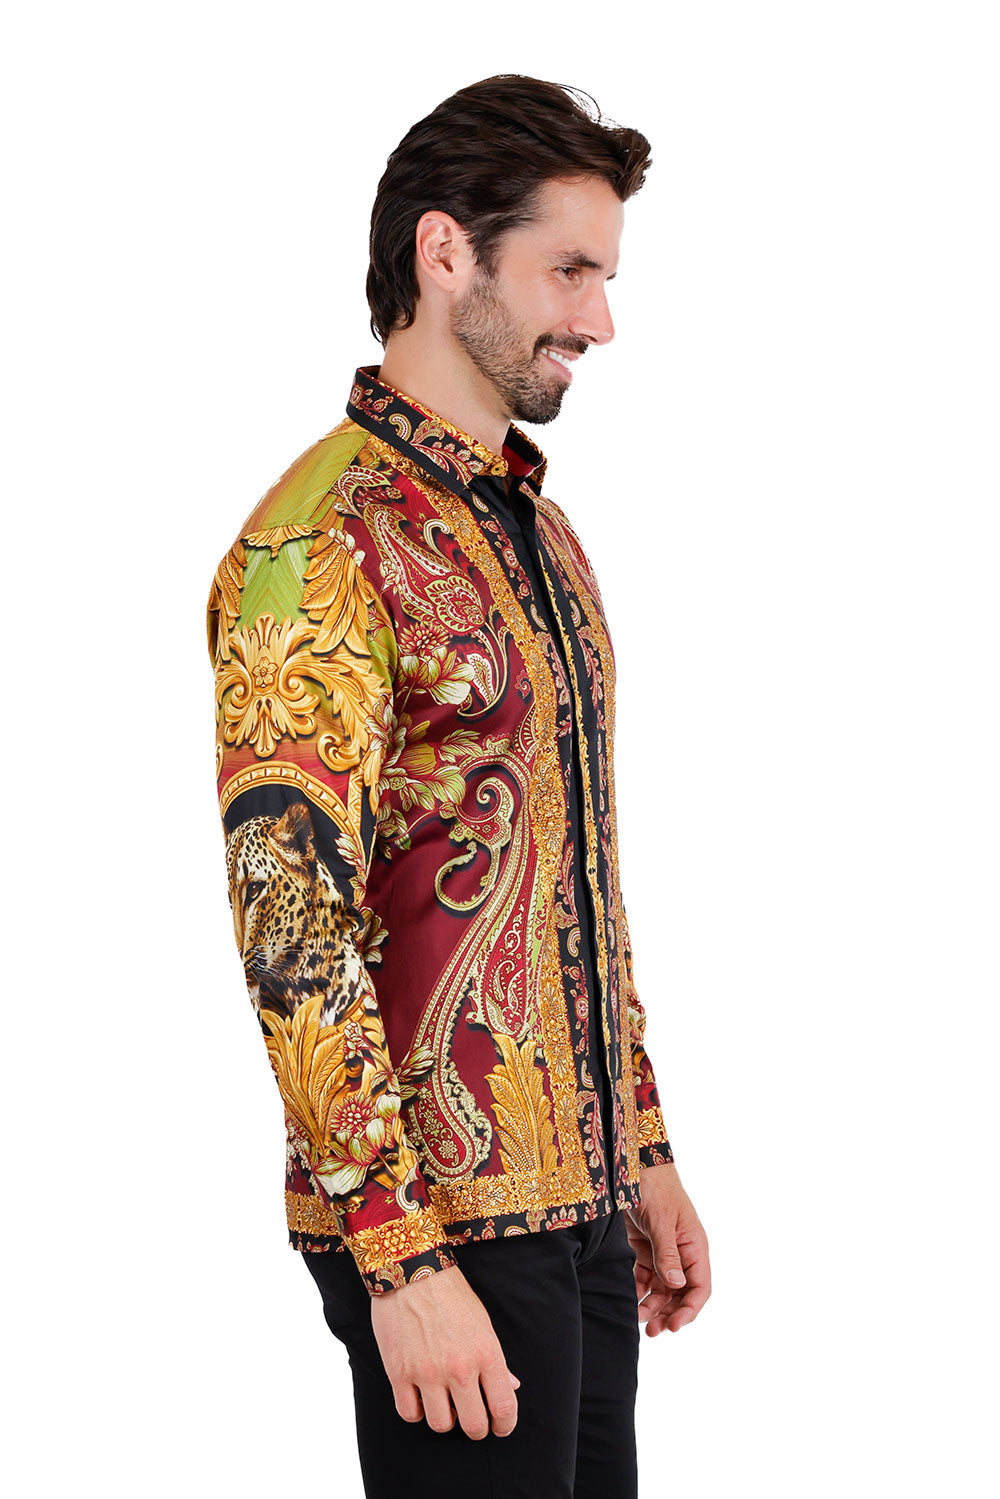 BARABAS Men's Rhinestone Leopard Baroque Long Sleeve Shirts 3SPR414 Plum